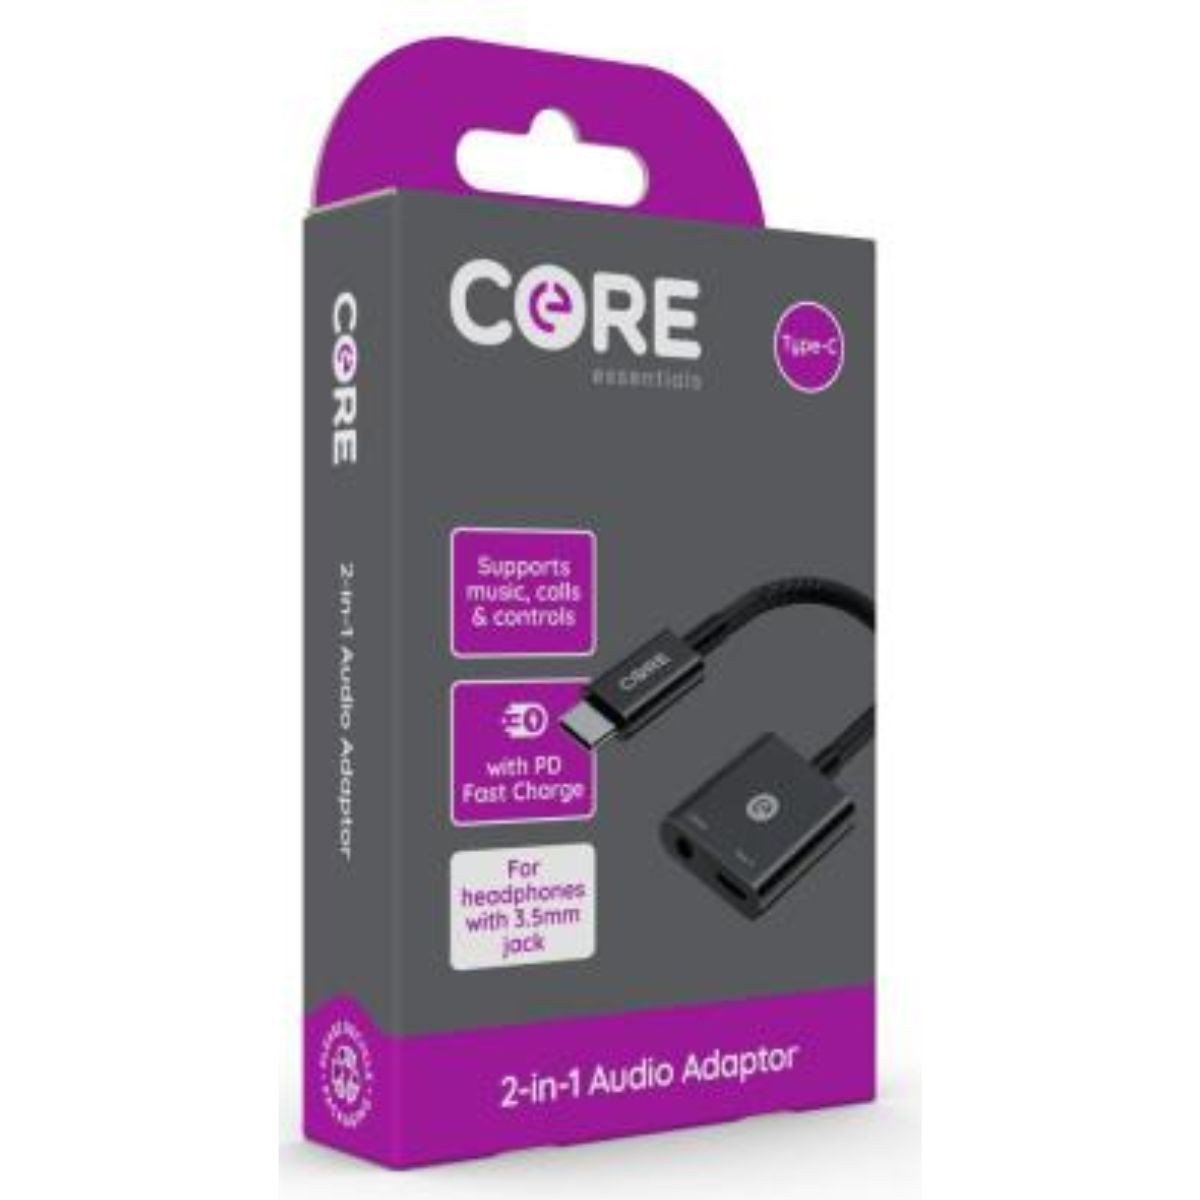 Core - 2 in 1 Audio Adaptor - 1pcs usb to 3.5mm audio adapter.